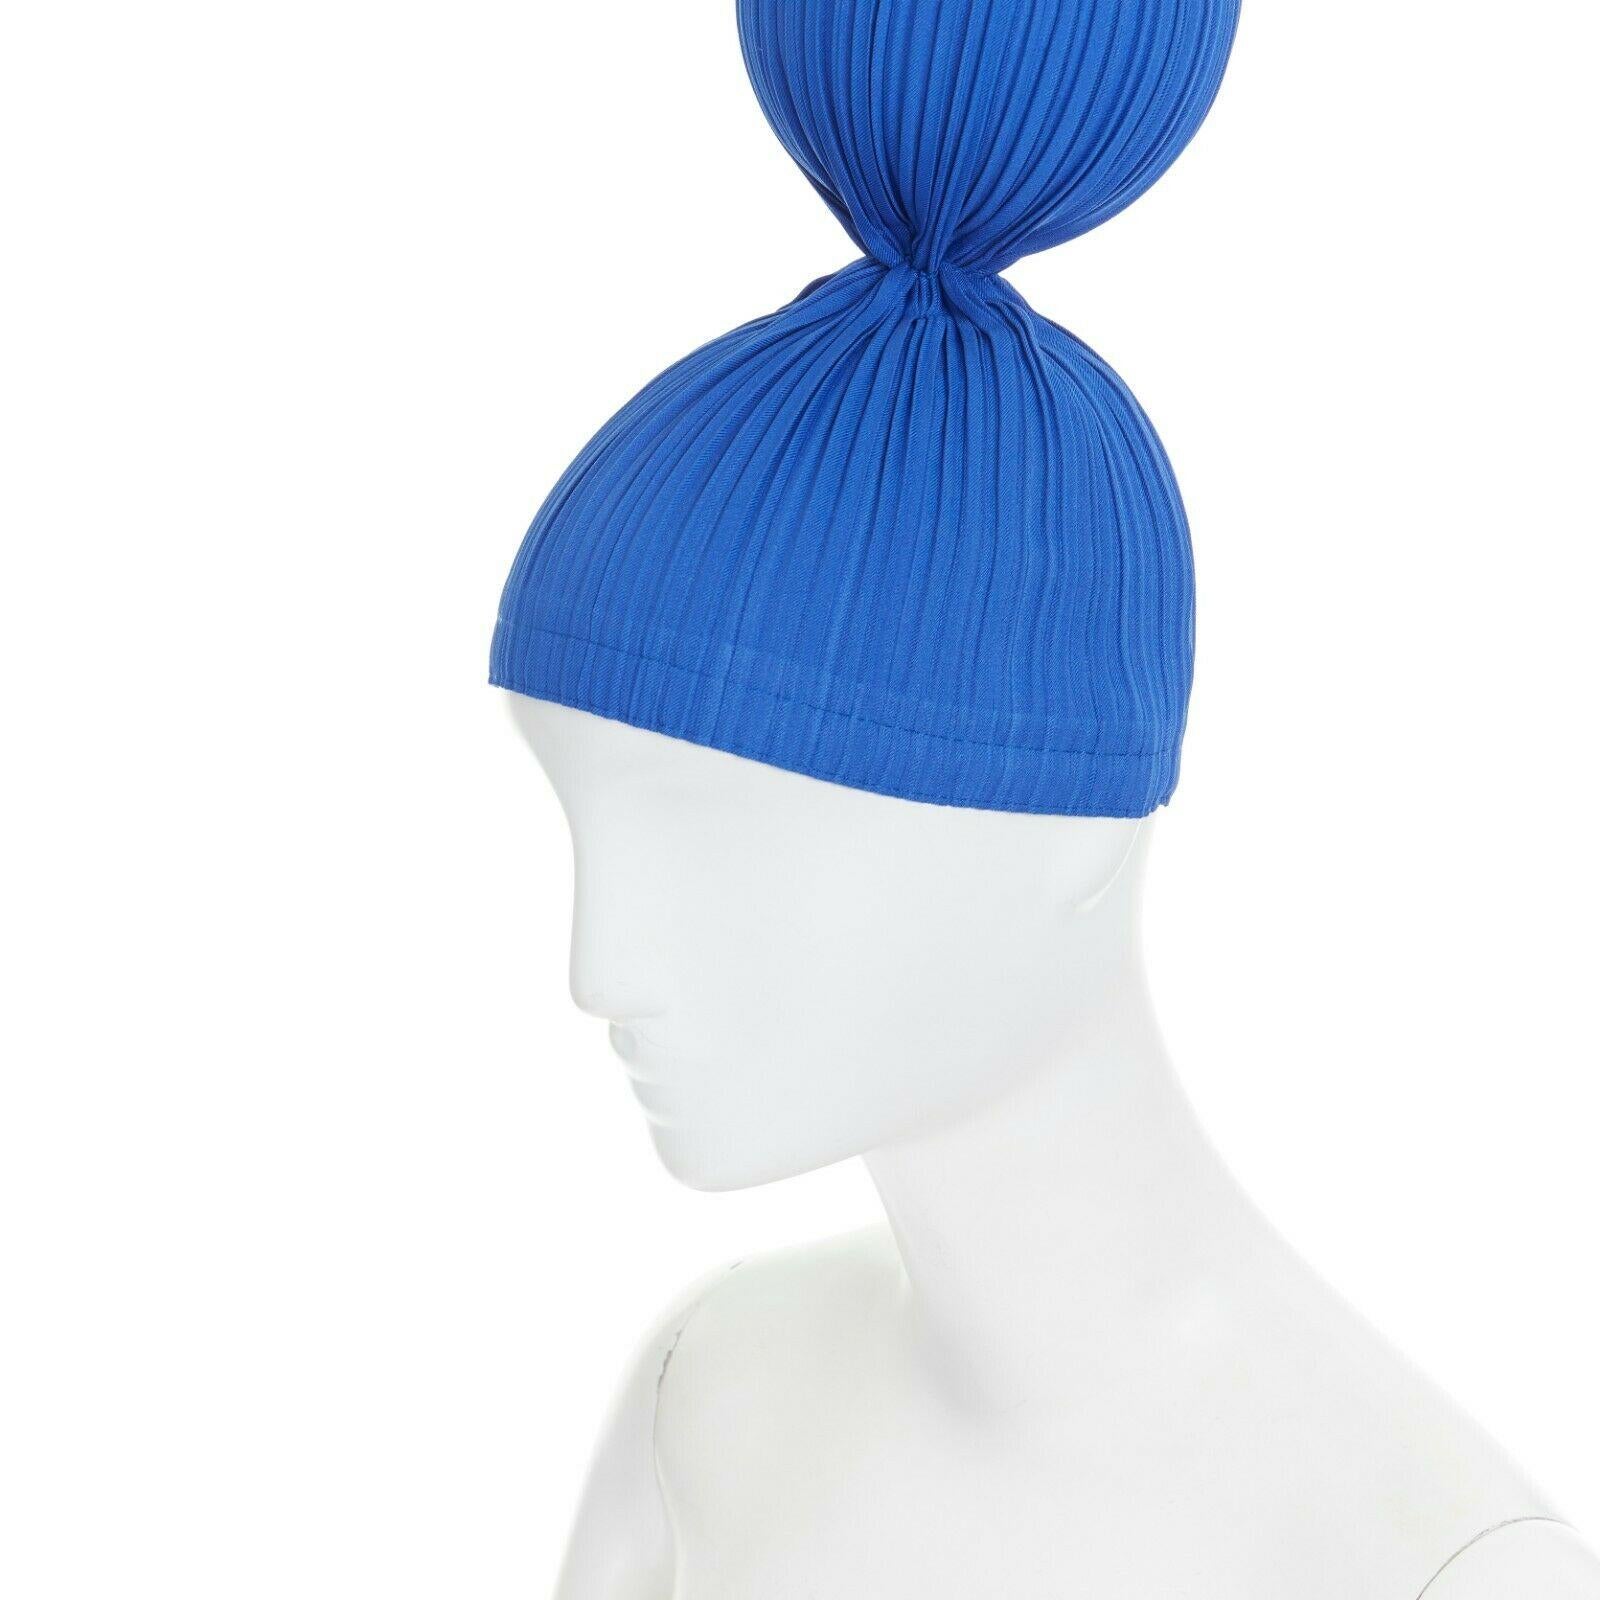 Blue ISSEY MIYAKE PLEATS PLEASE blue pleated single sphere ball bubble statement hat